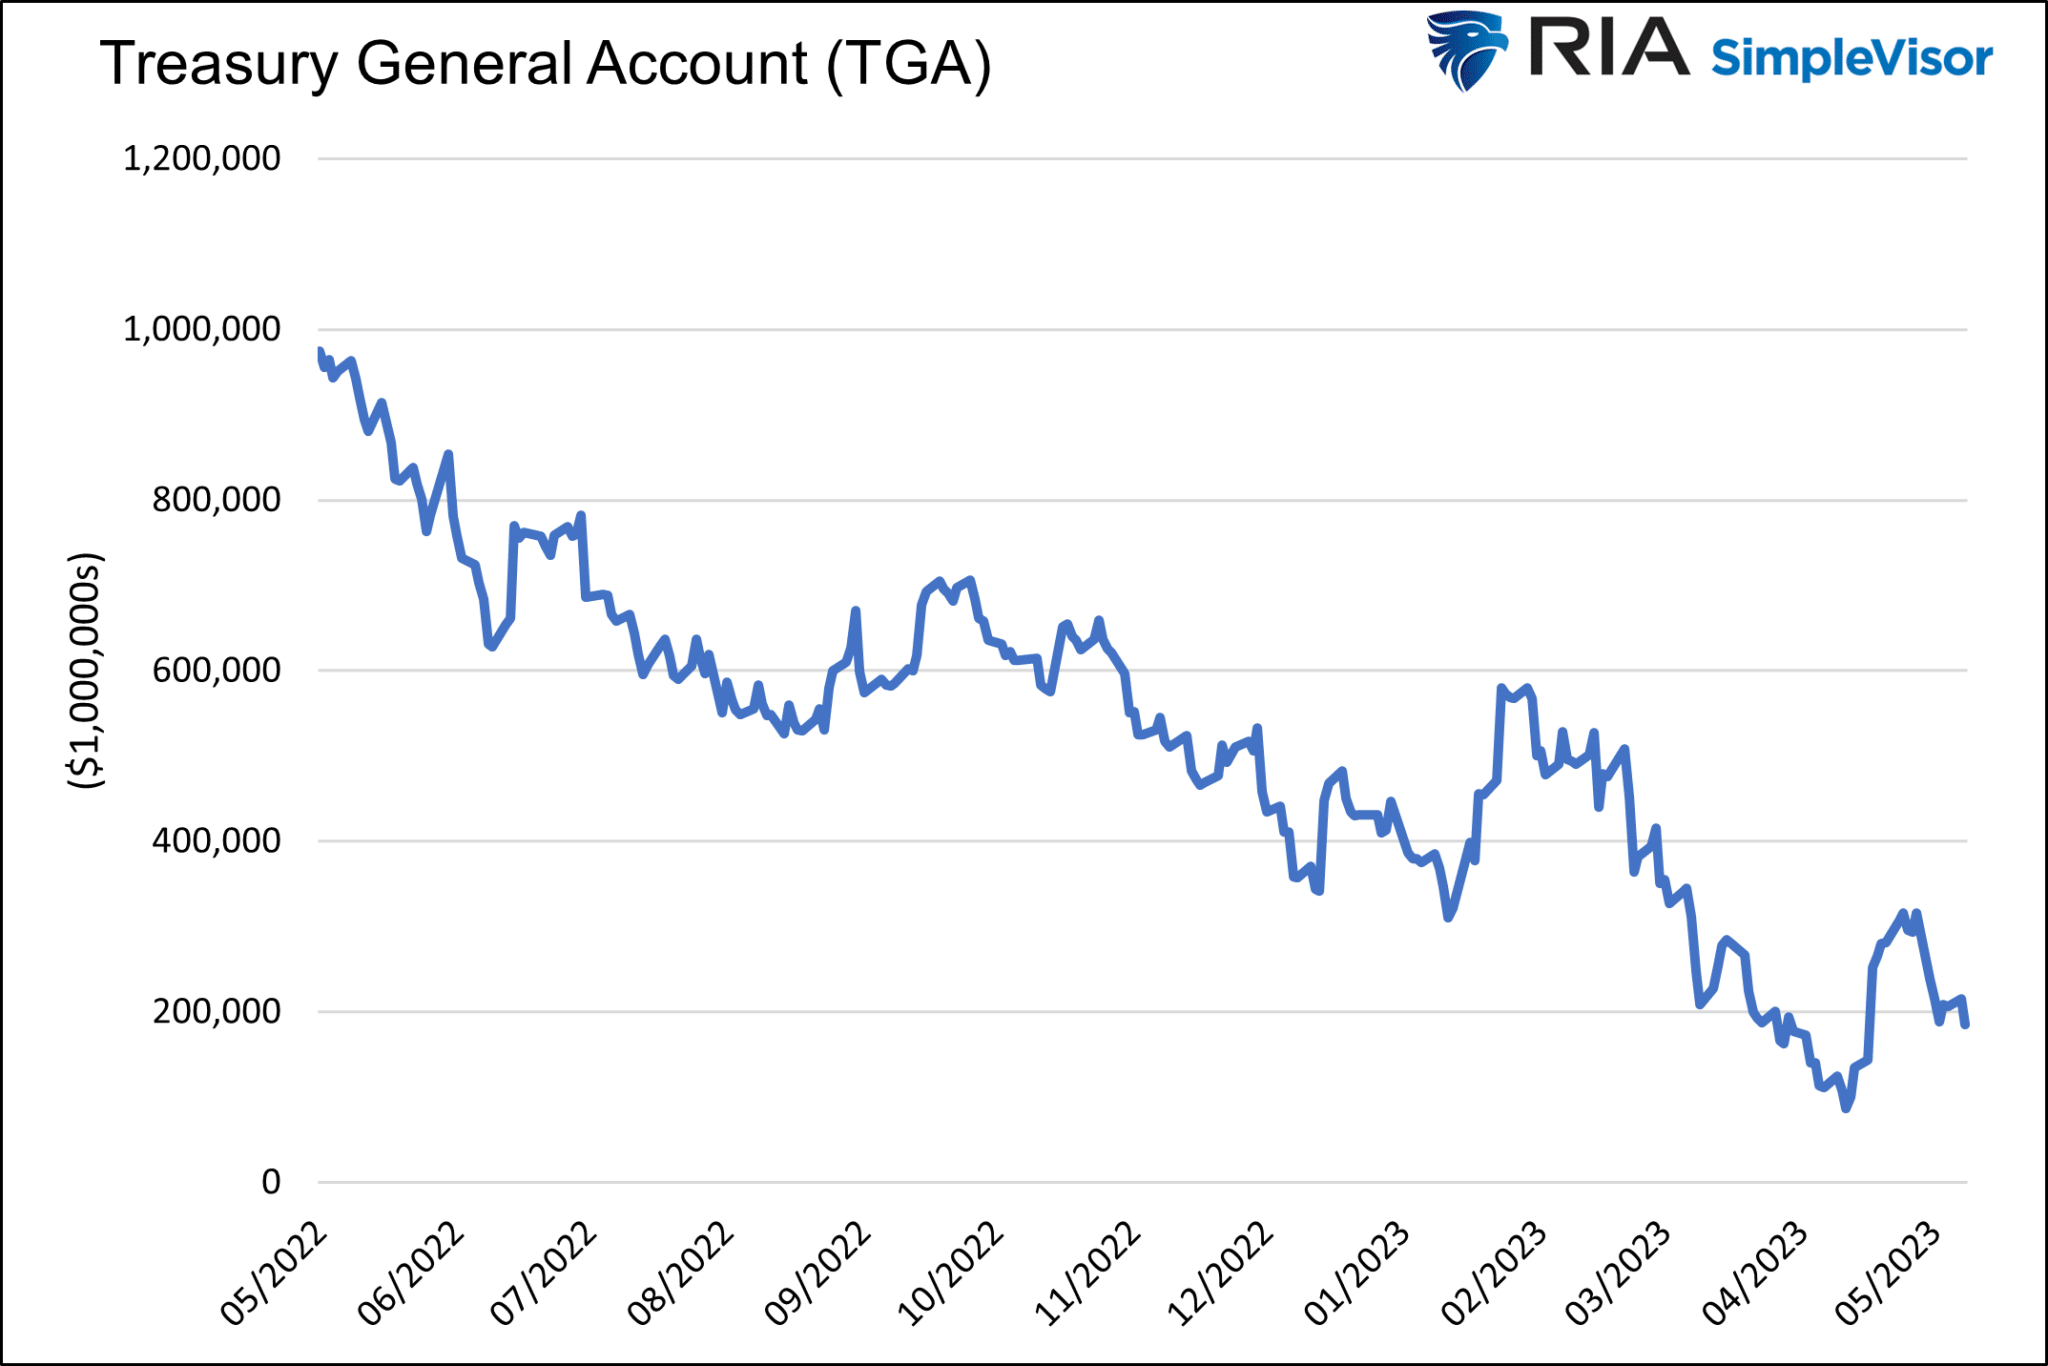 Treasury General Account